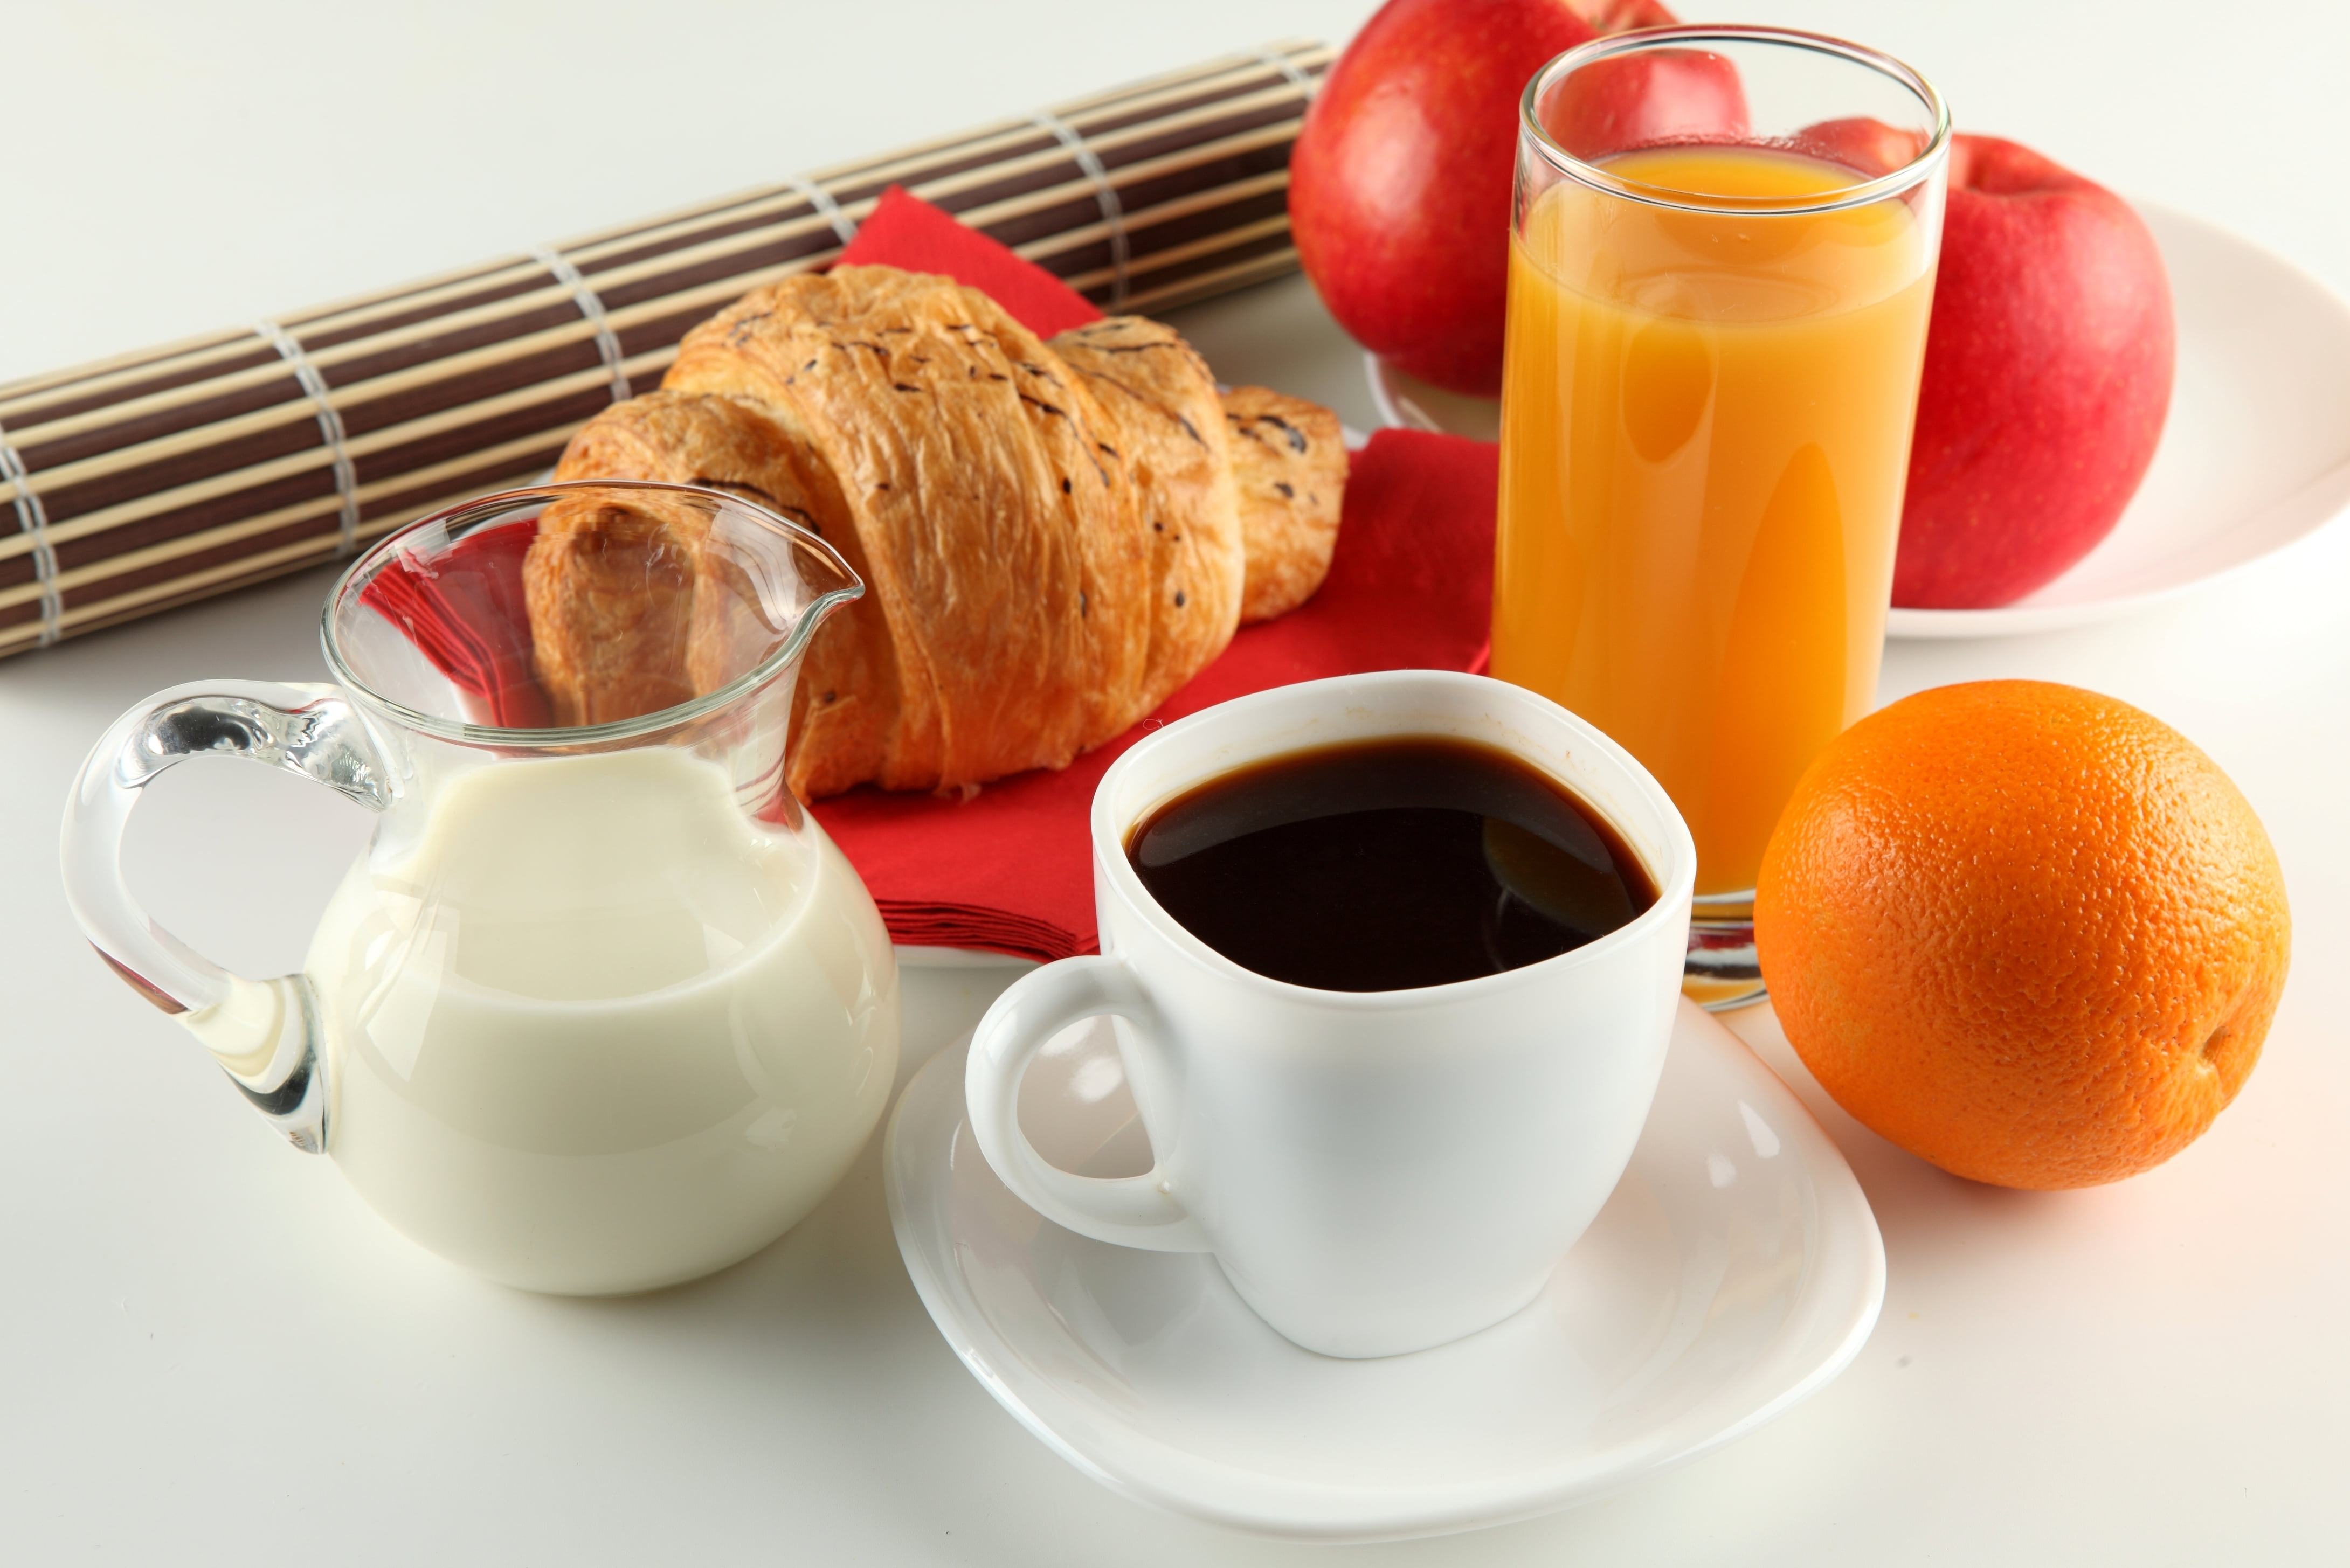 white ceramic mug, white ceramic saucer, clear pitcher, orange fruit, and orange juice